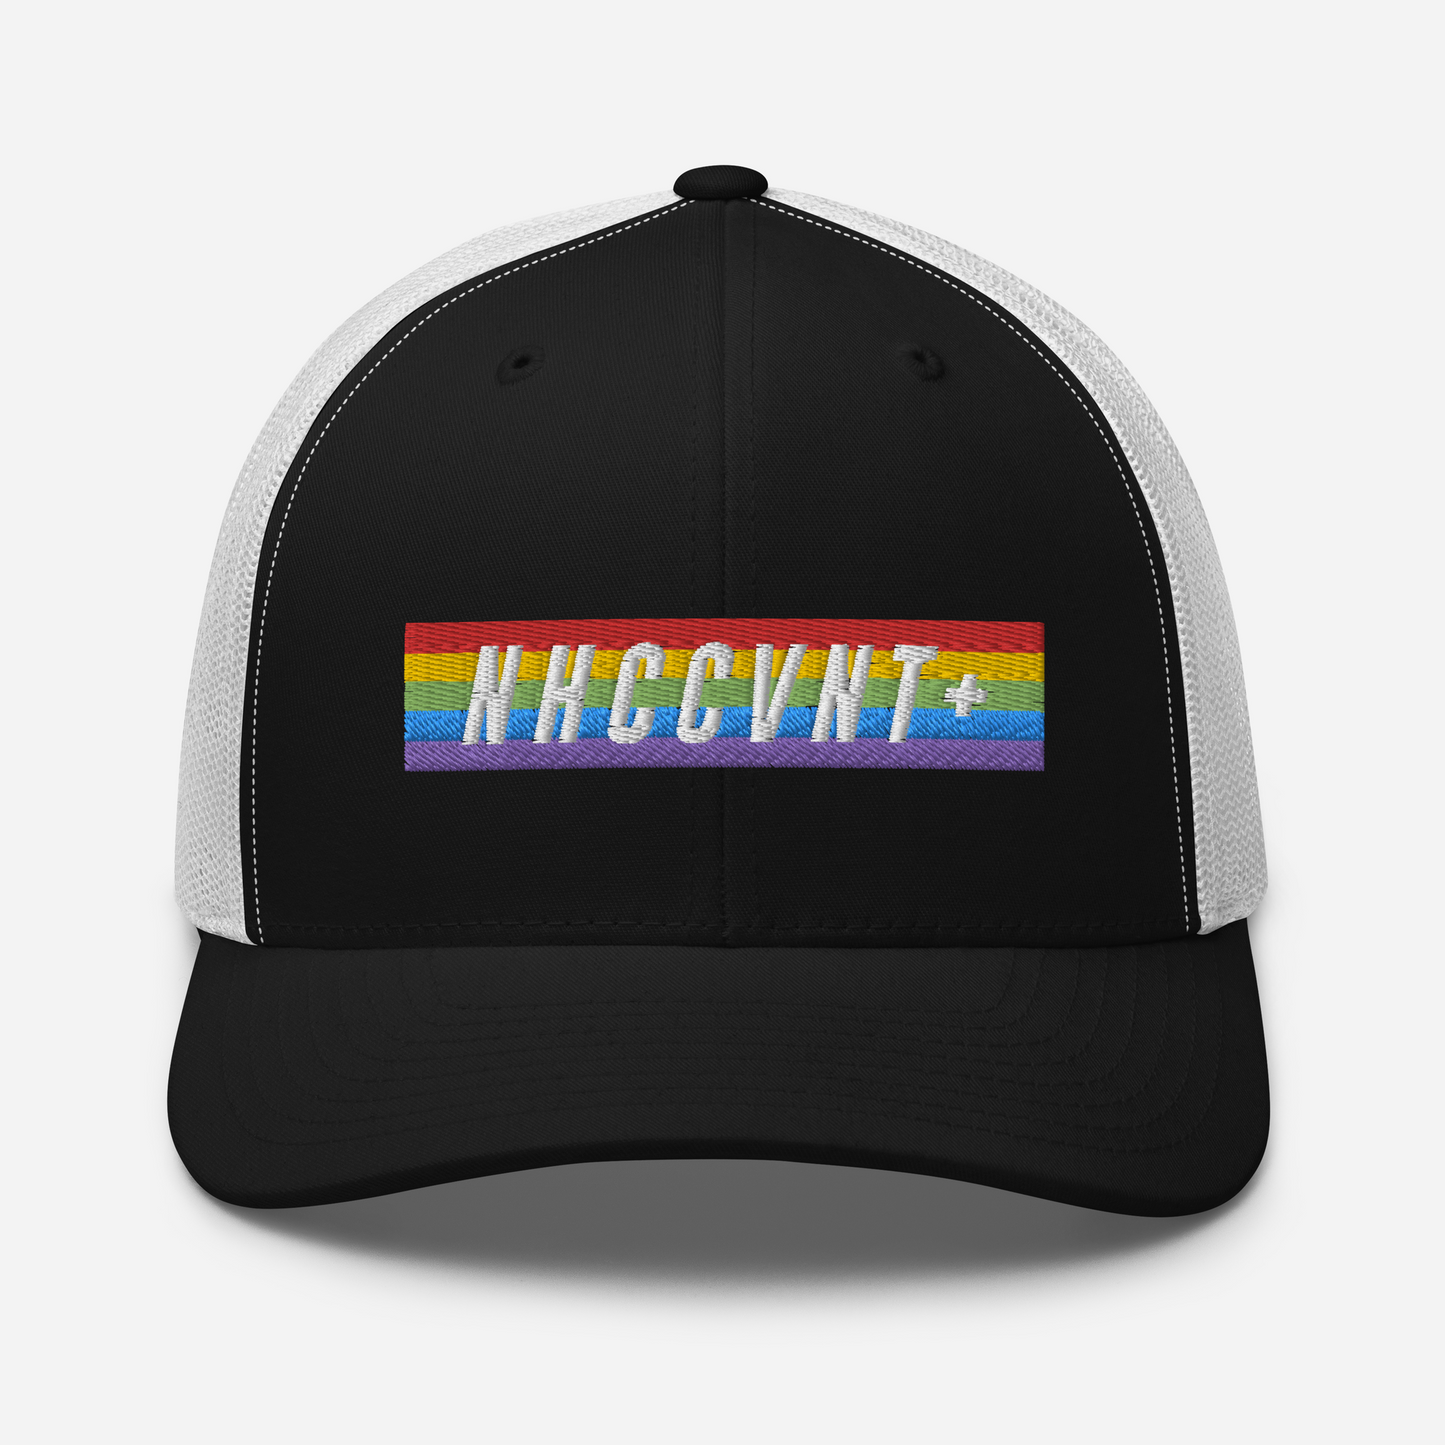 NHCCVNT+ Trucker Hat